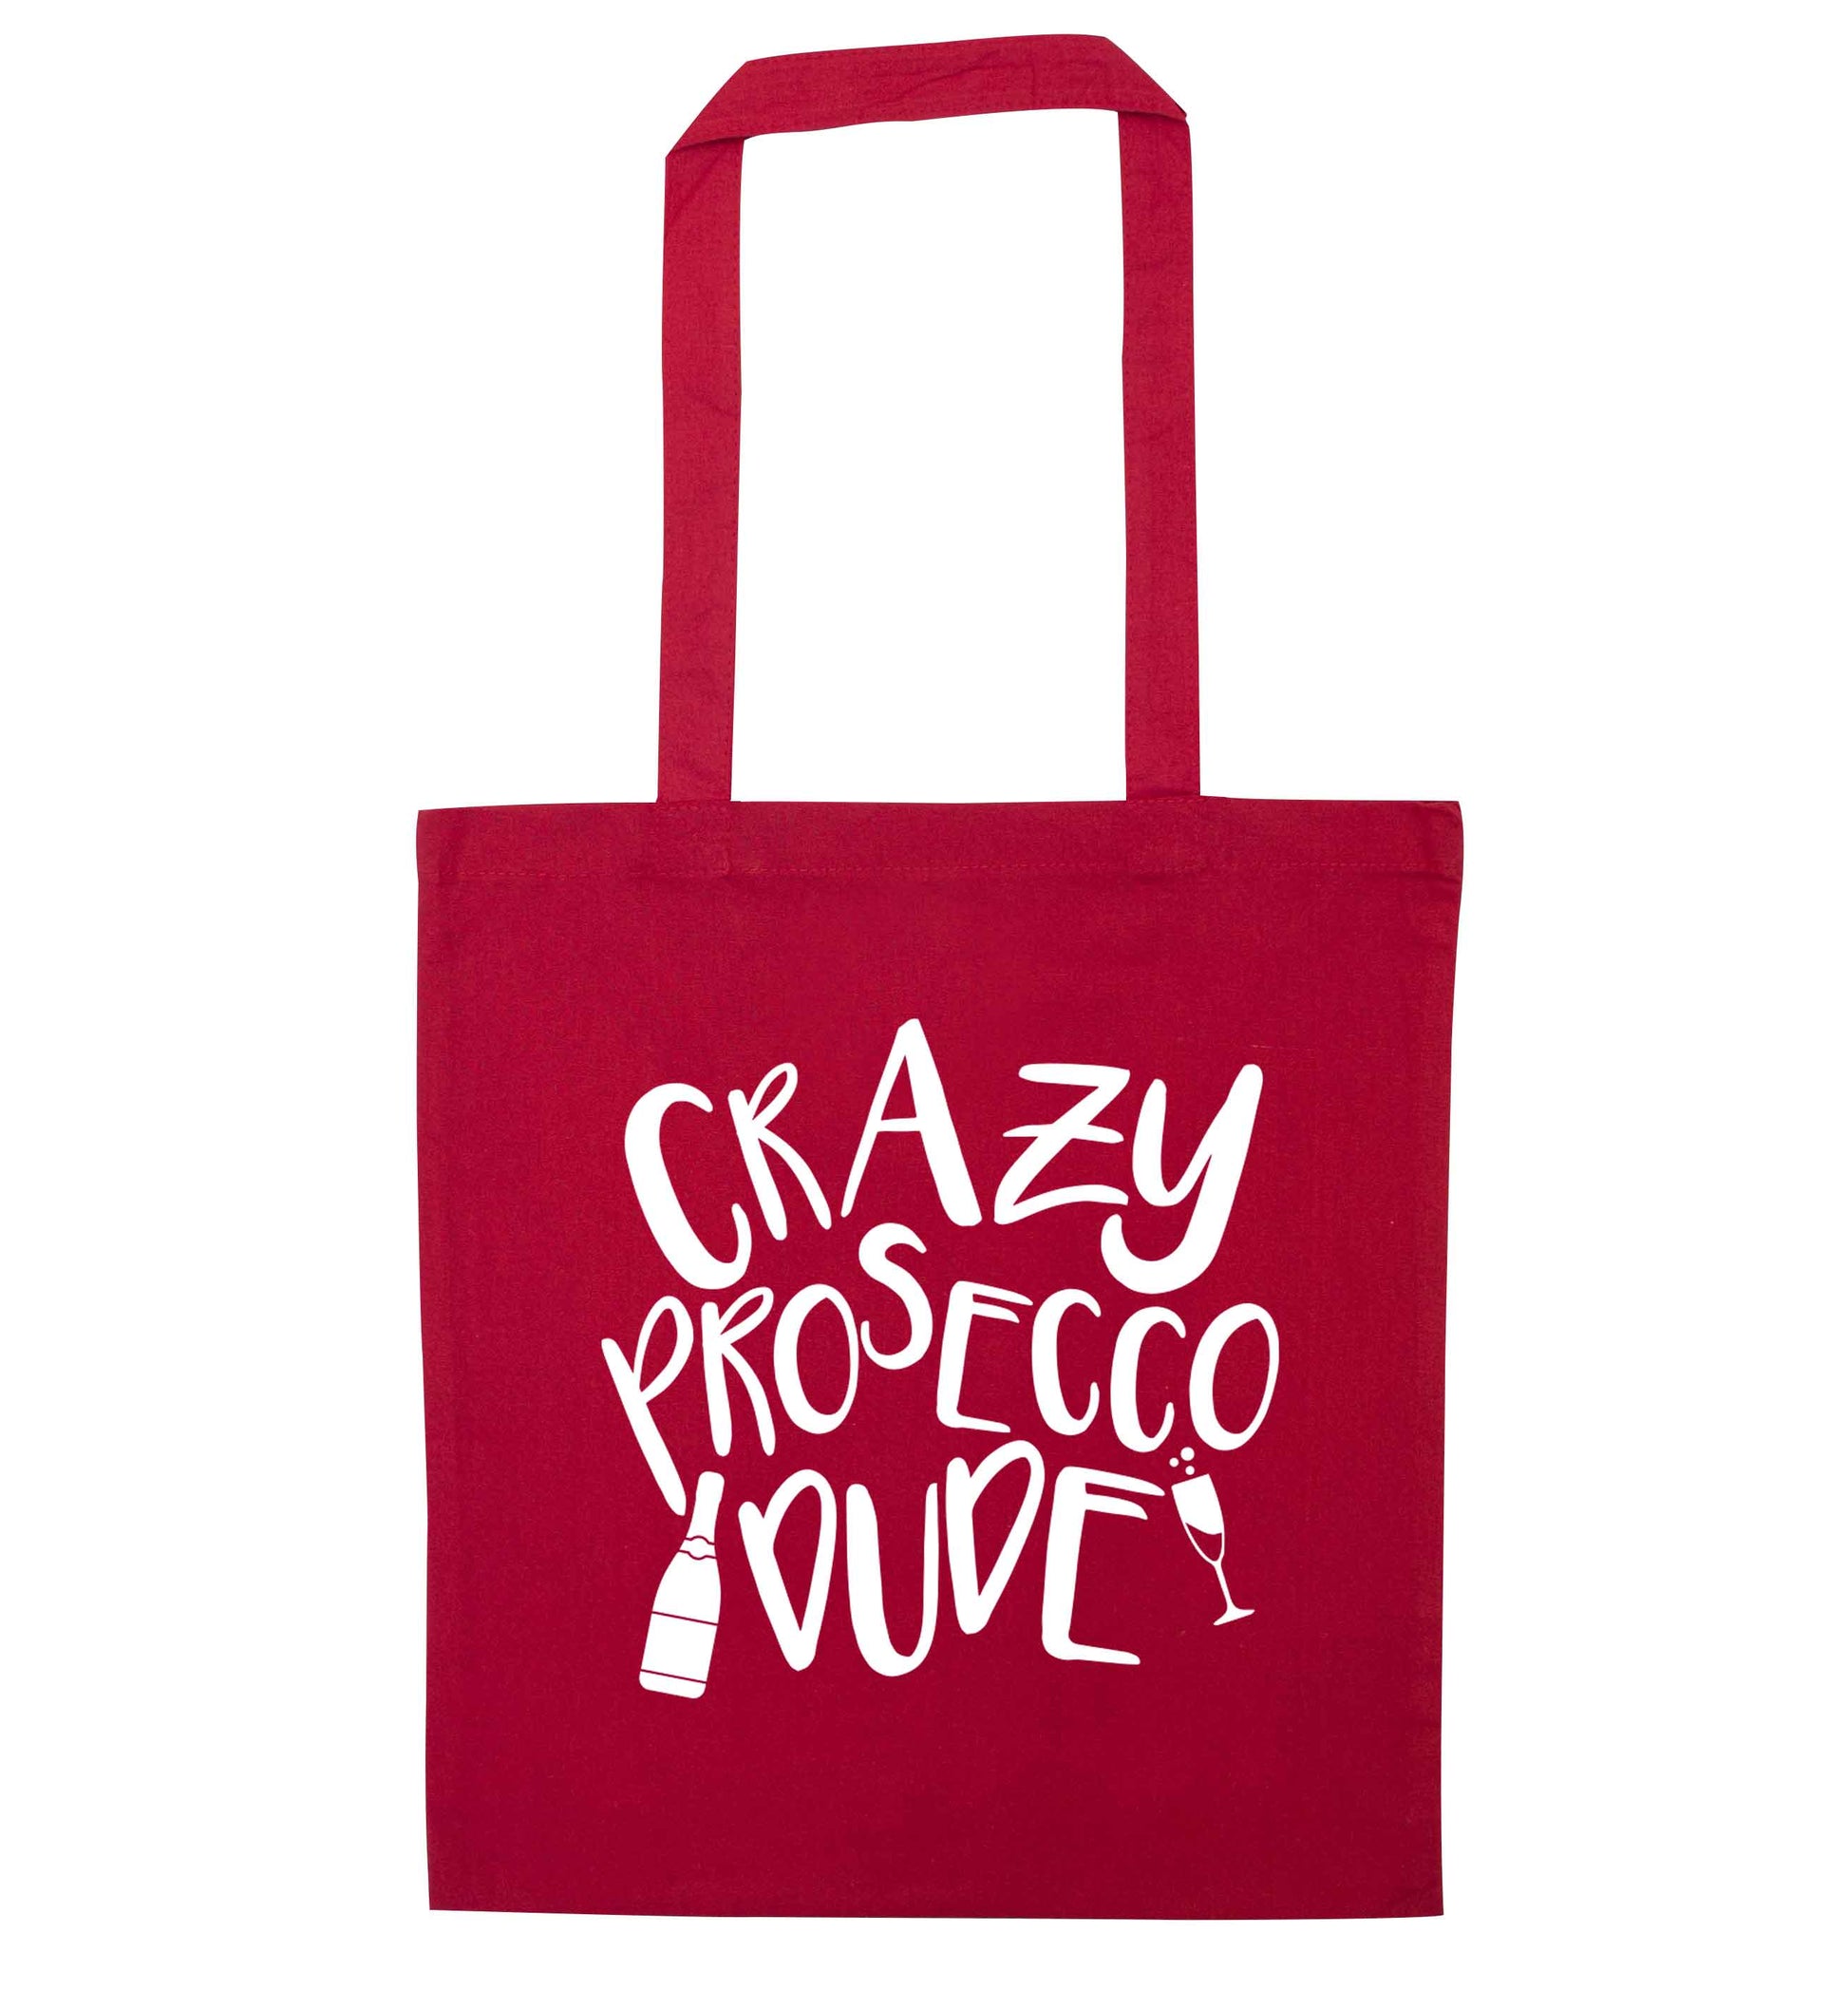 Crazy prosecco dude red tote bag